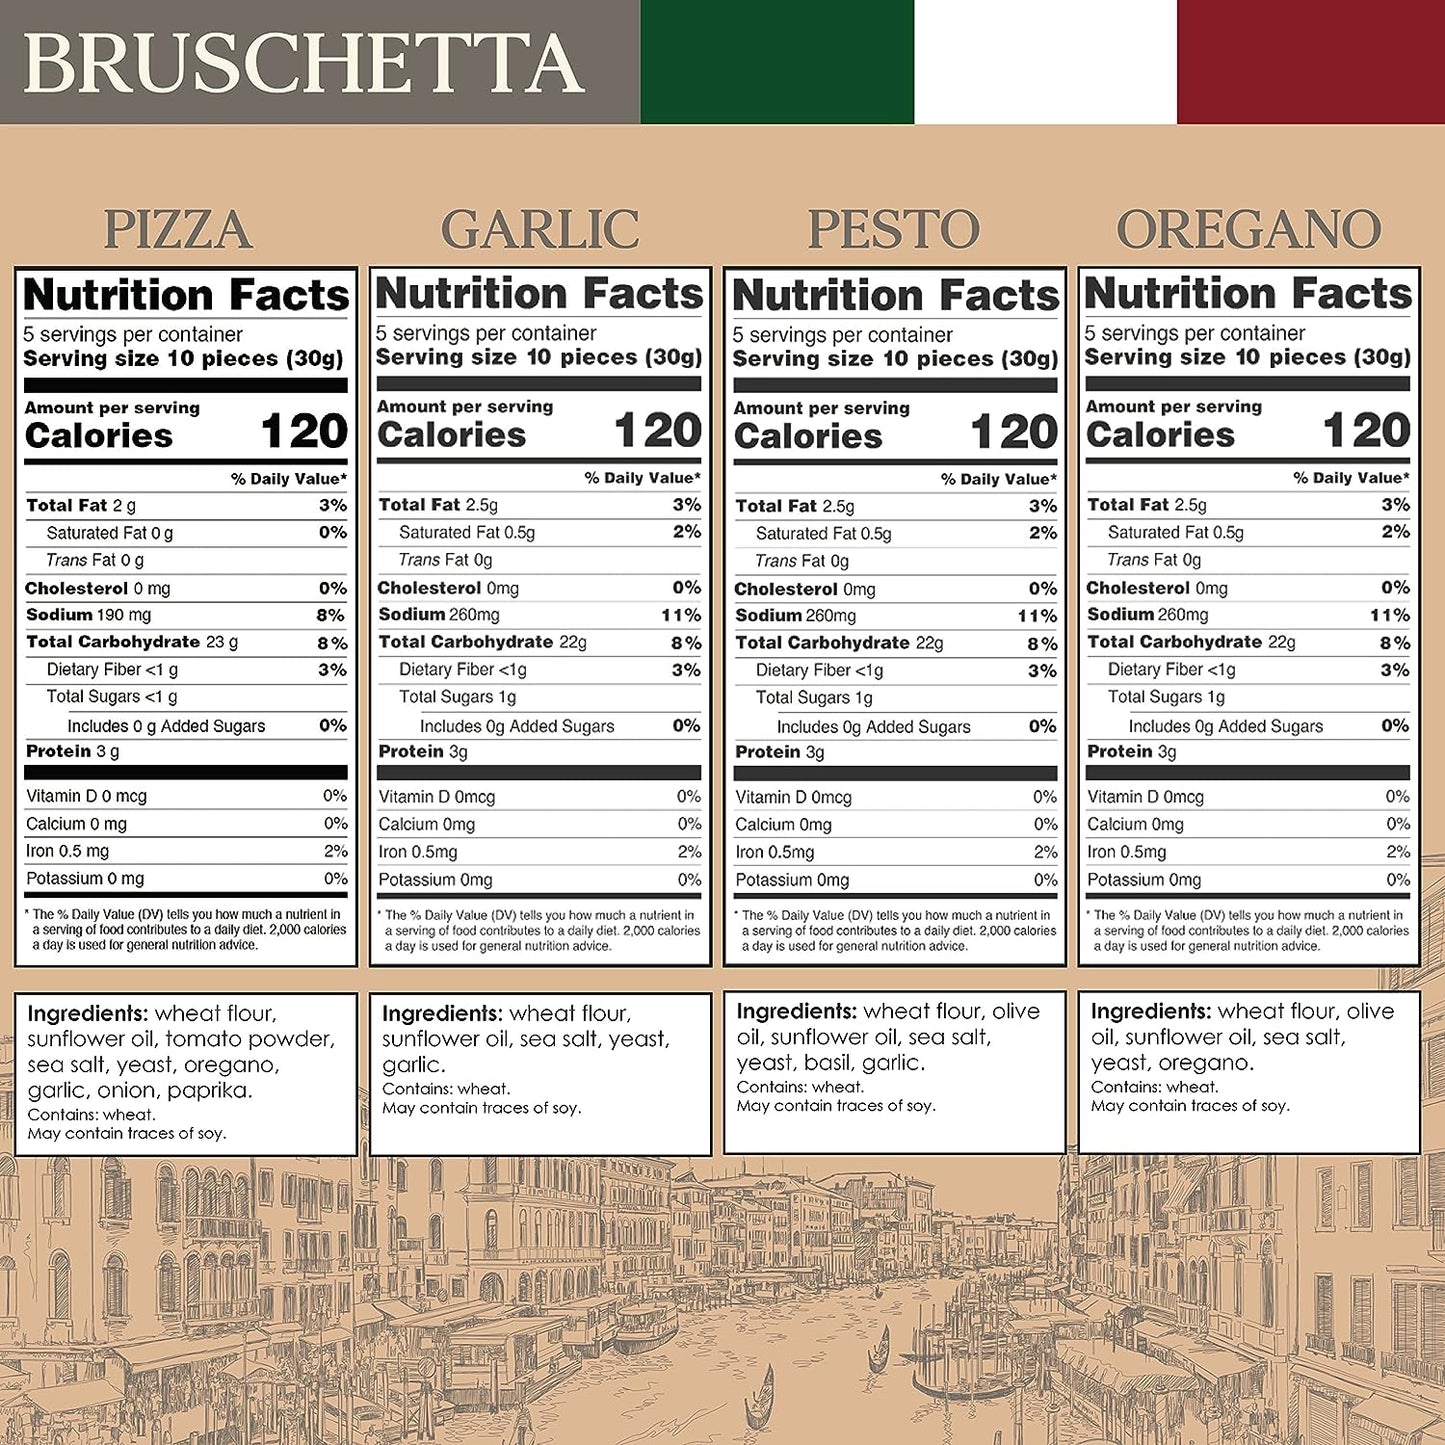 Cracker Assortment - Pack of 4 - Crostini Toast for Bruschetta - Sharing Size - Kosher, Vegan - Assorted Gourmet Flavors Pesto, Oregano, Pizza, Garlic